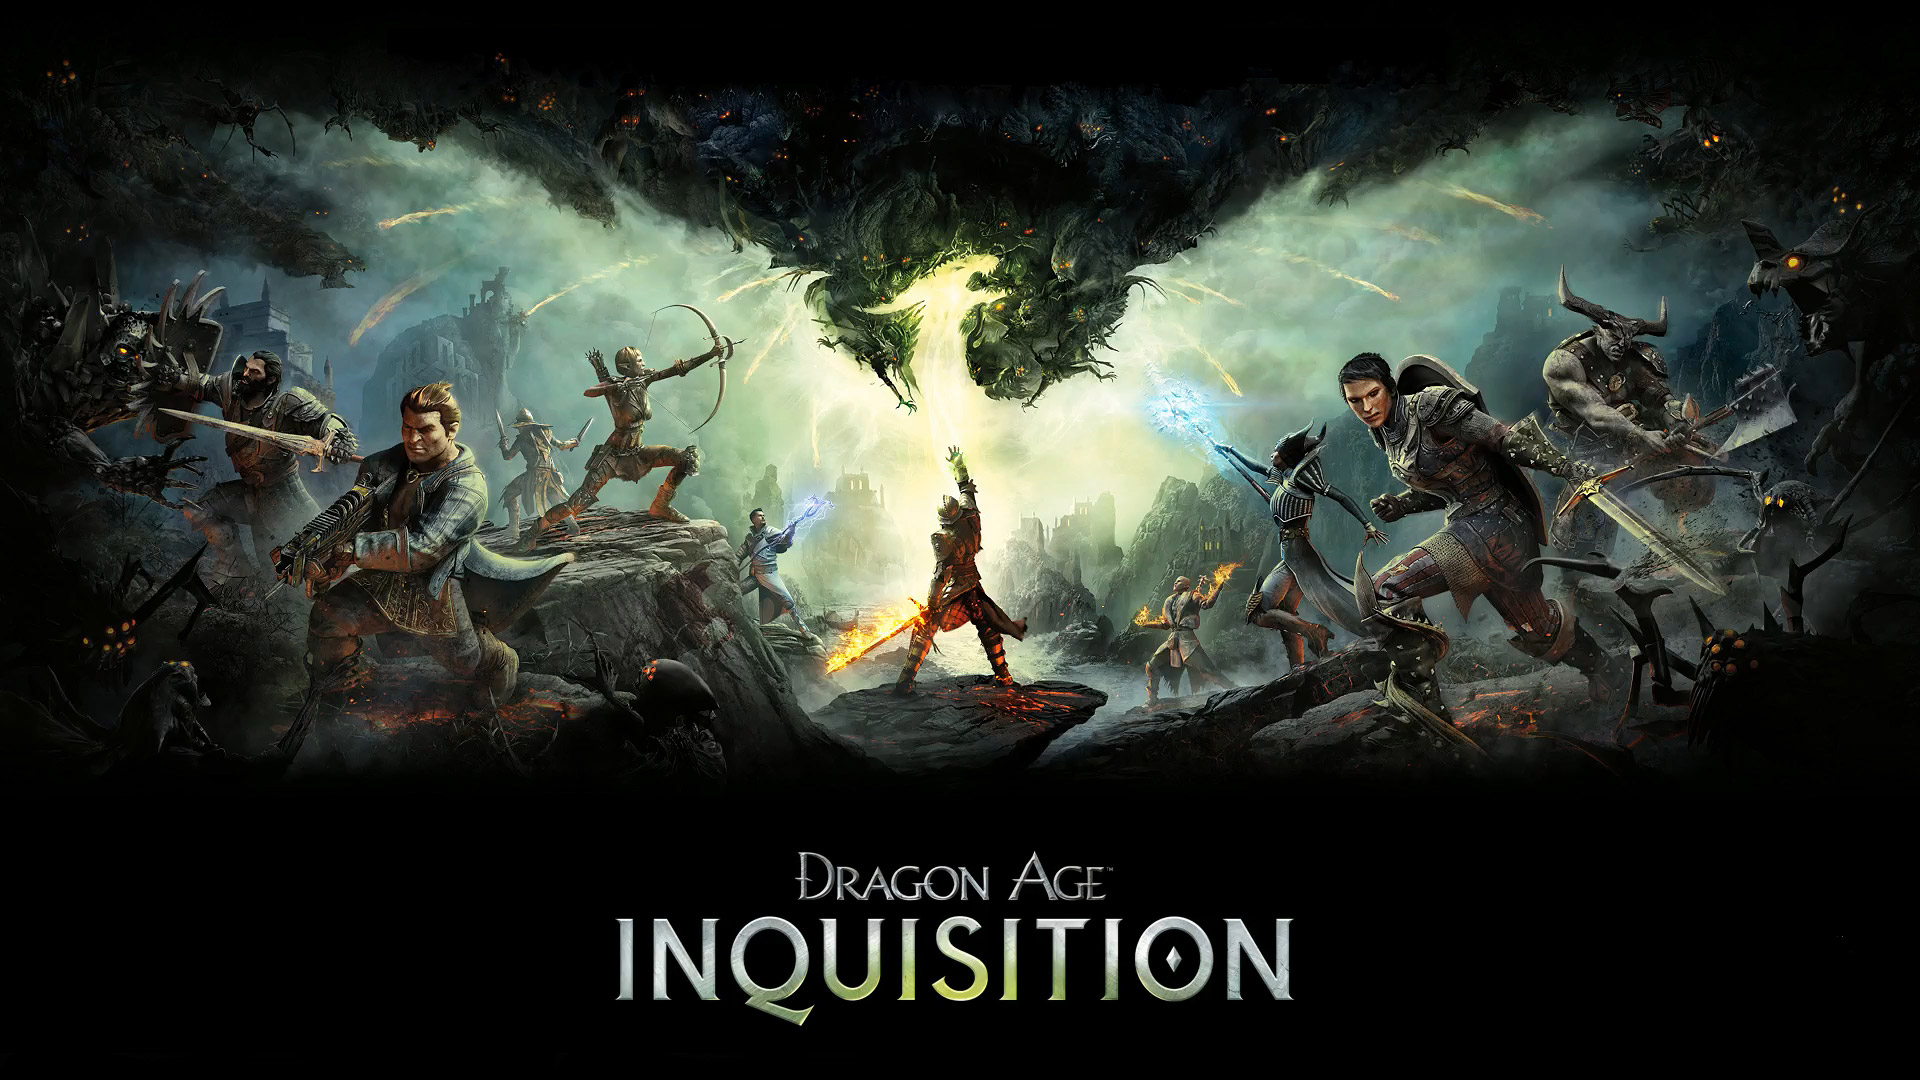 Dragon Age Inquisition Wallpaper in 1920x1080